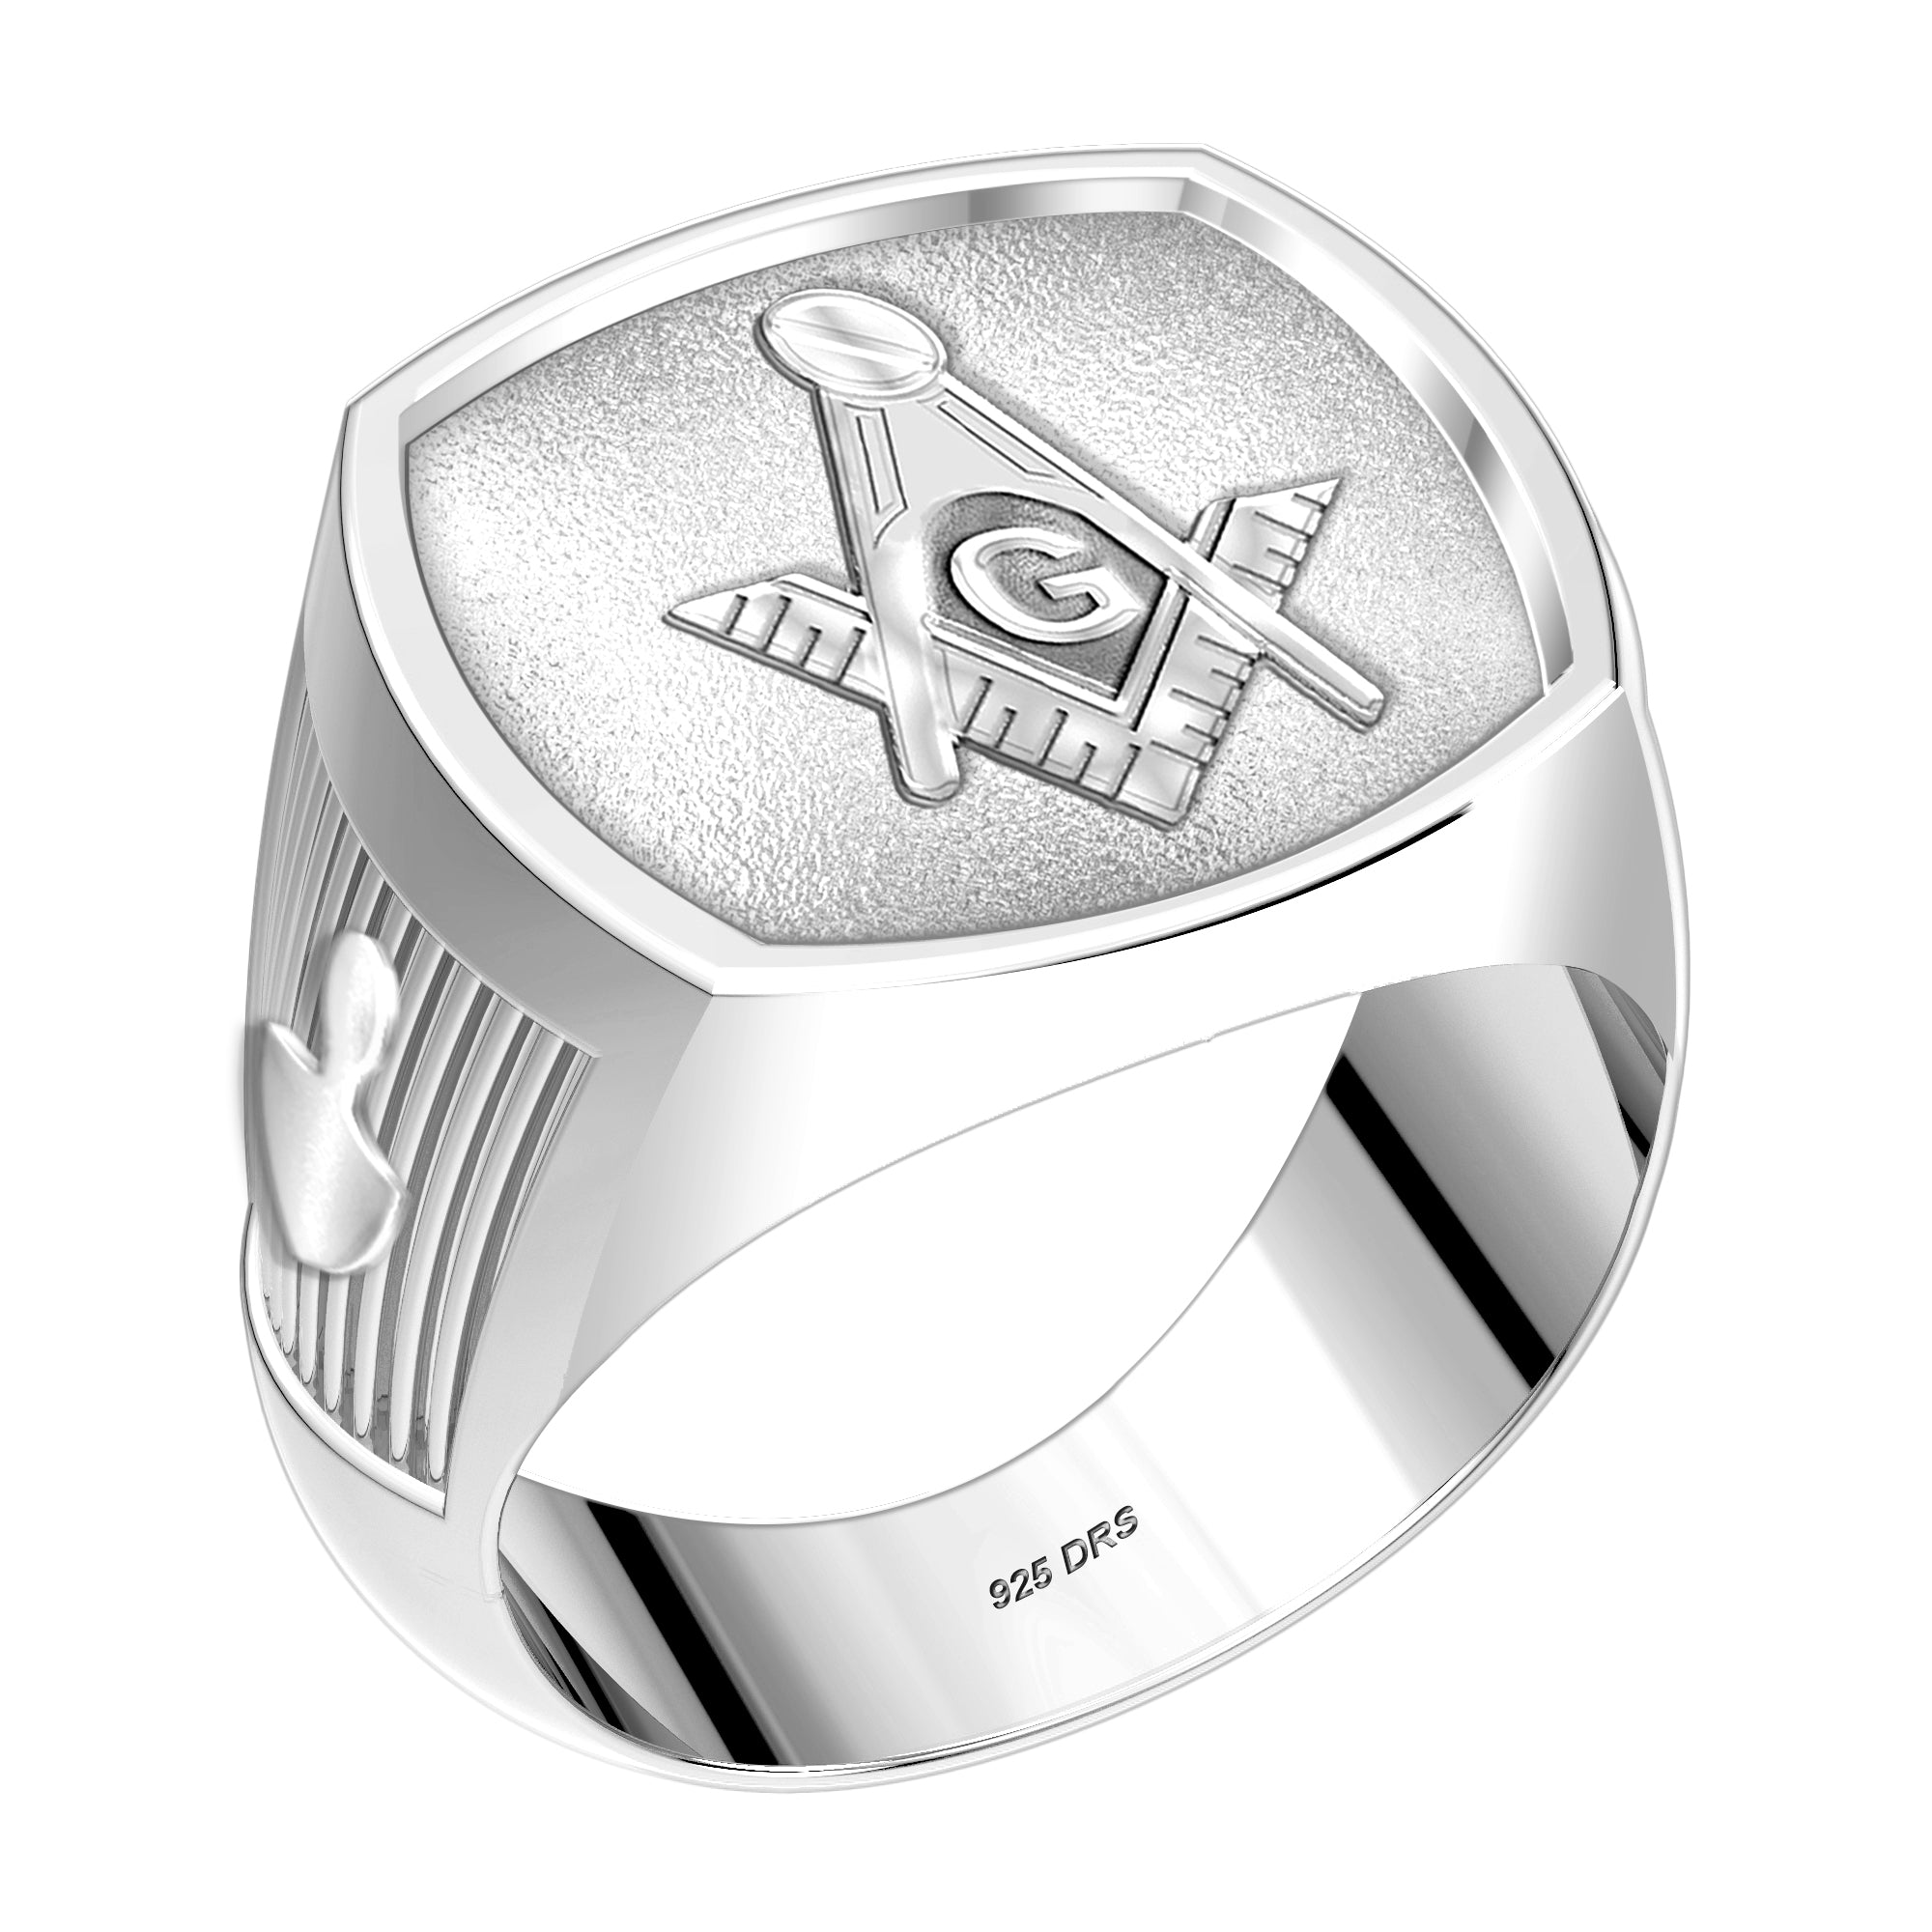 IFUAQZ Men's Stainless Steel Masonic Freemason Rings Gold Blue Free and  Accepted Masons Symbol Signet Band Size 7|Amazon.com